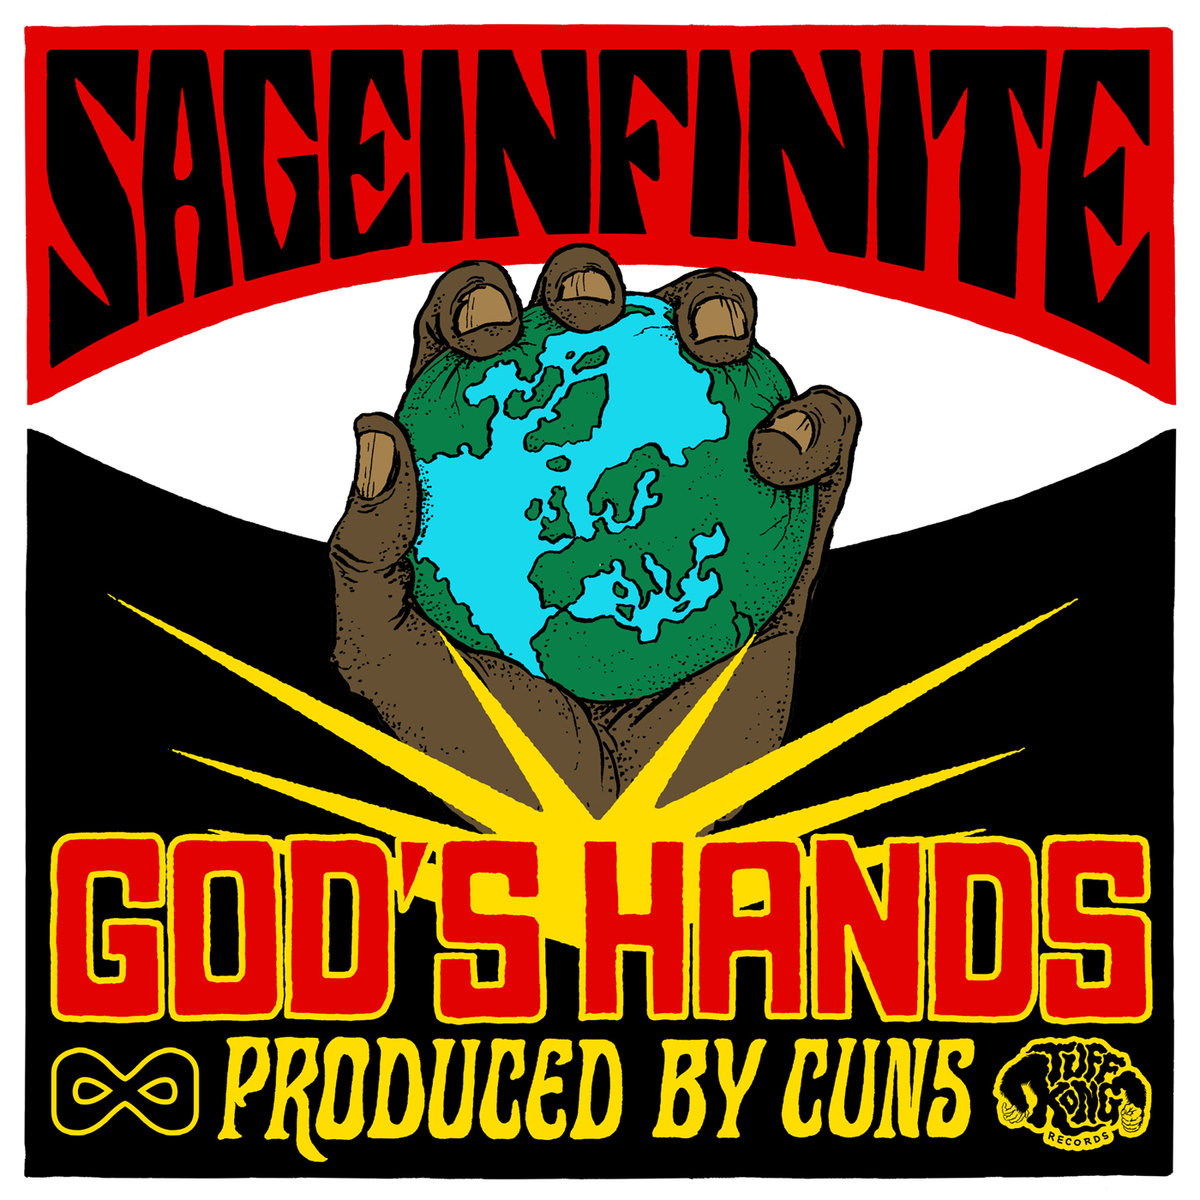 God_s_hands